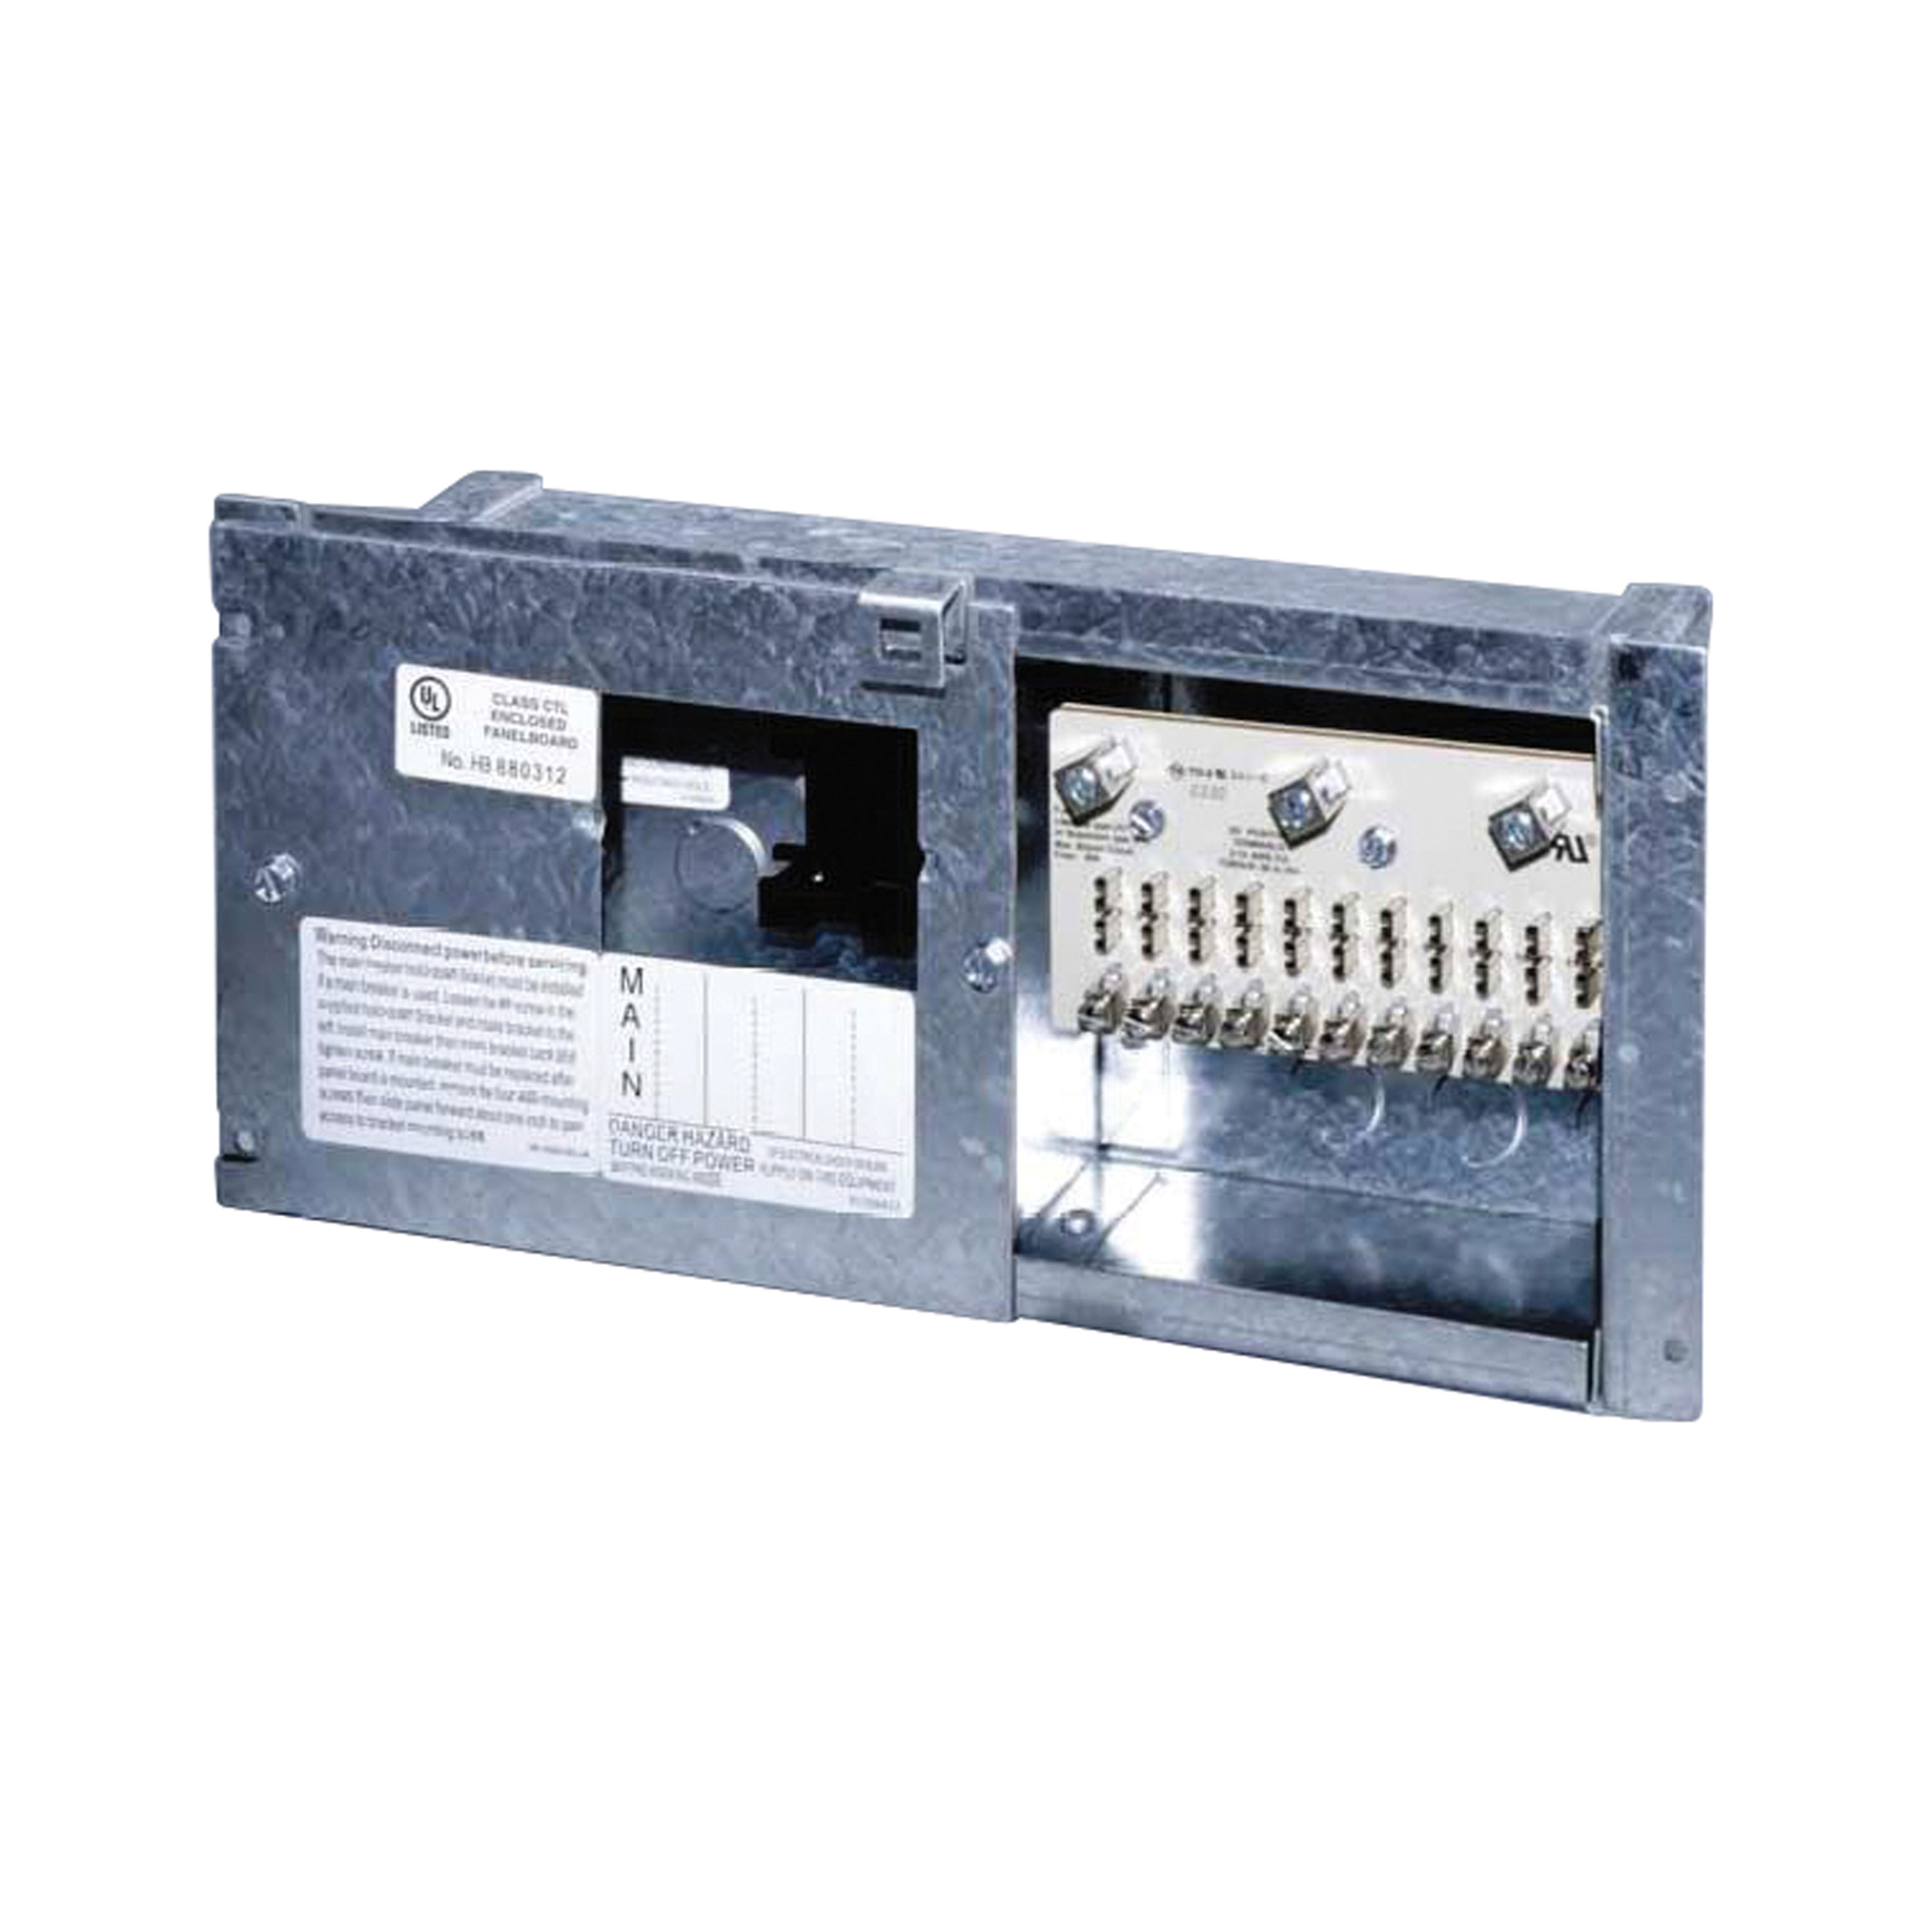 Parallax Power Supply 80D 30 Amp Distribution Panel